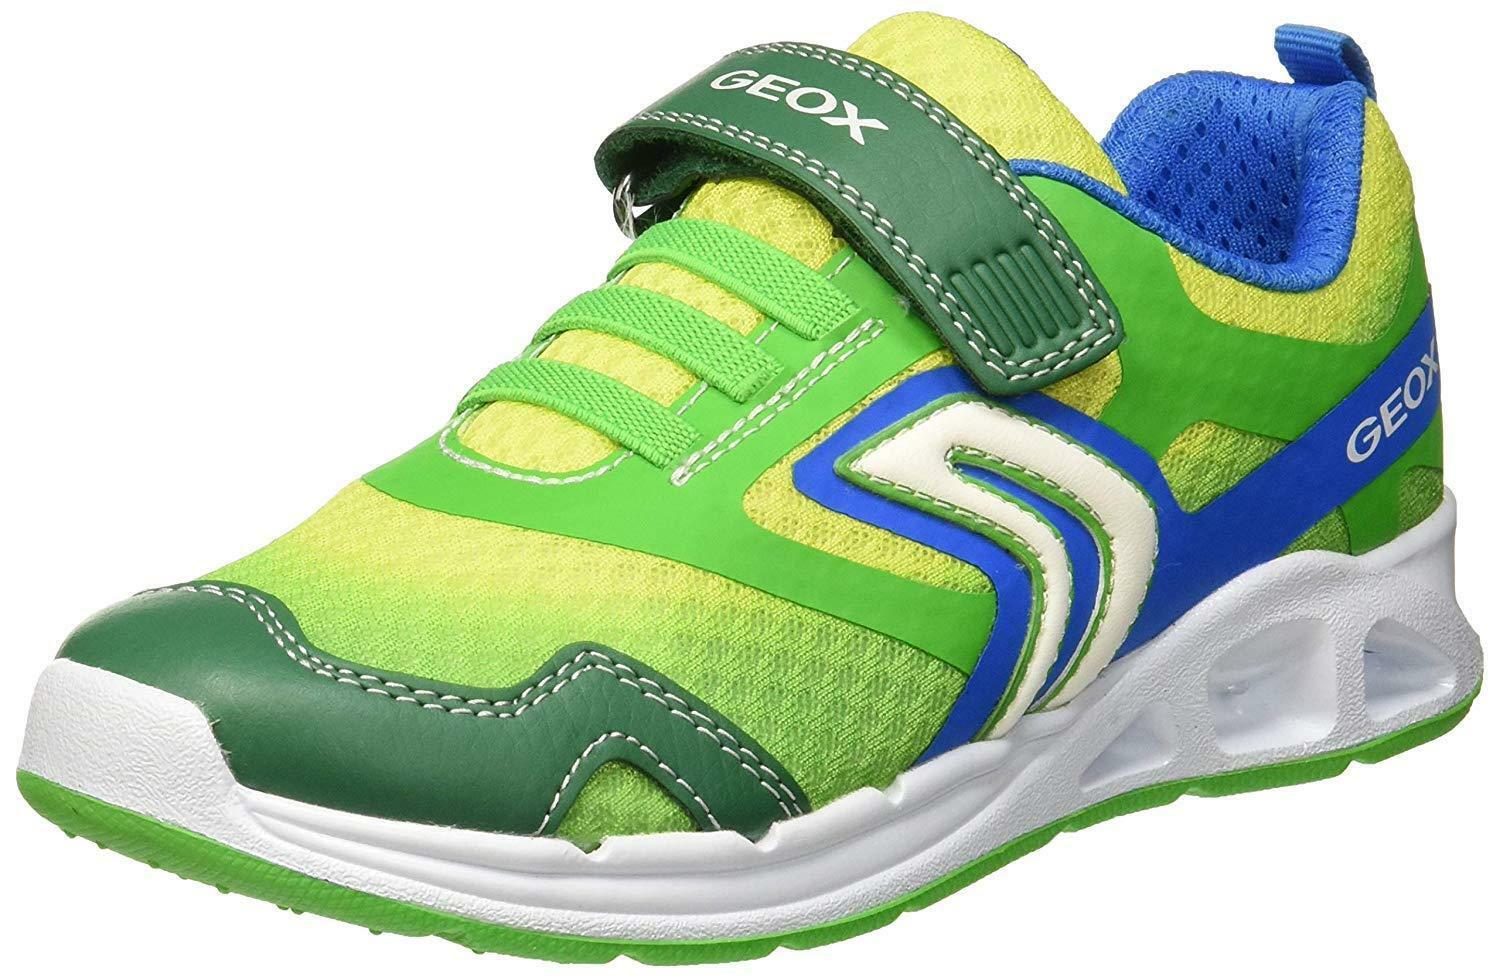 scarpe sportive verdi